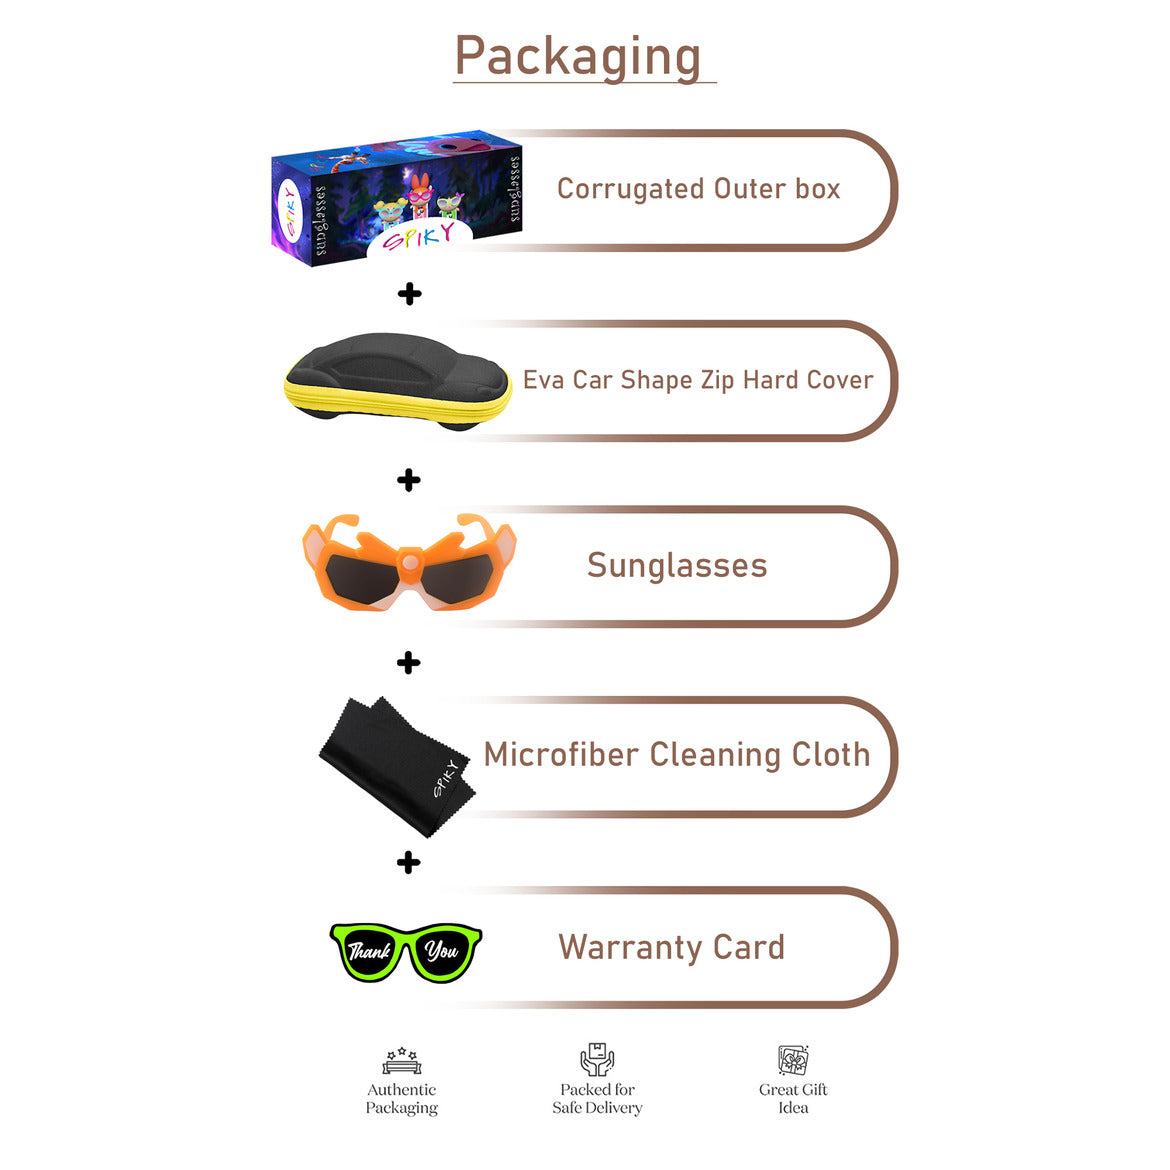 Spiky Robot UV Protected Sunglass - Orange